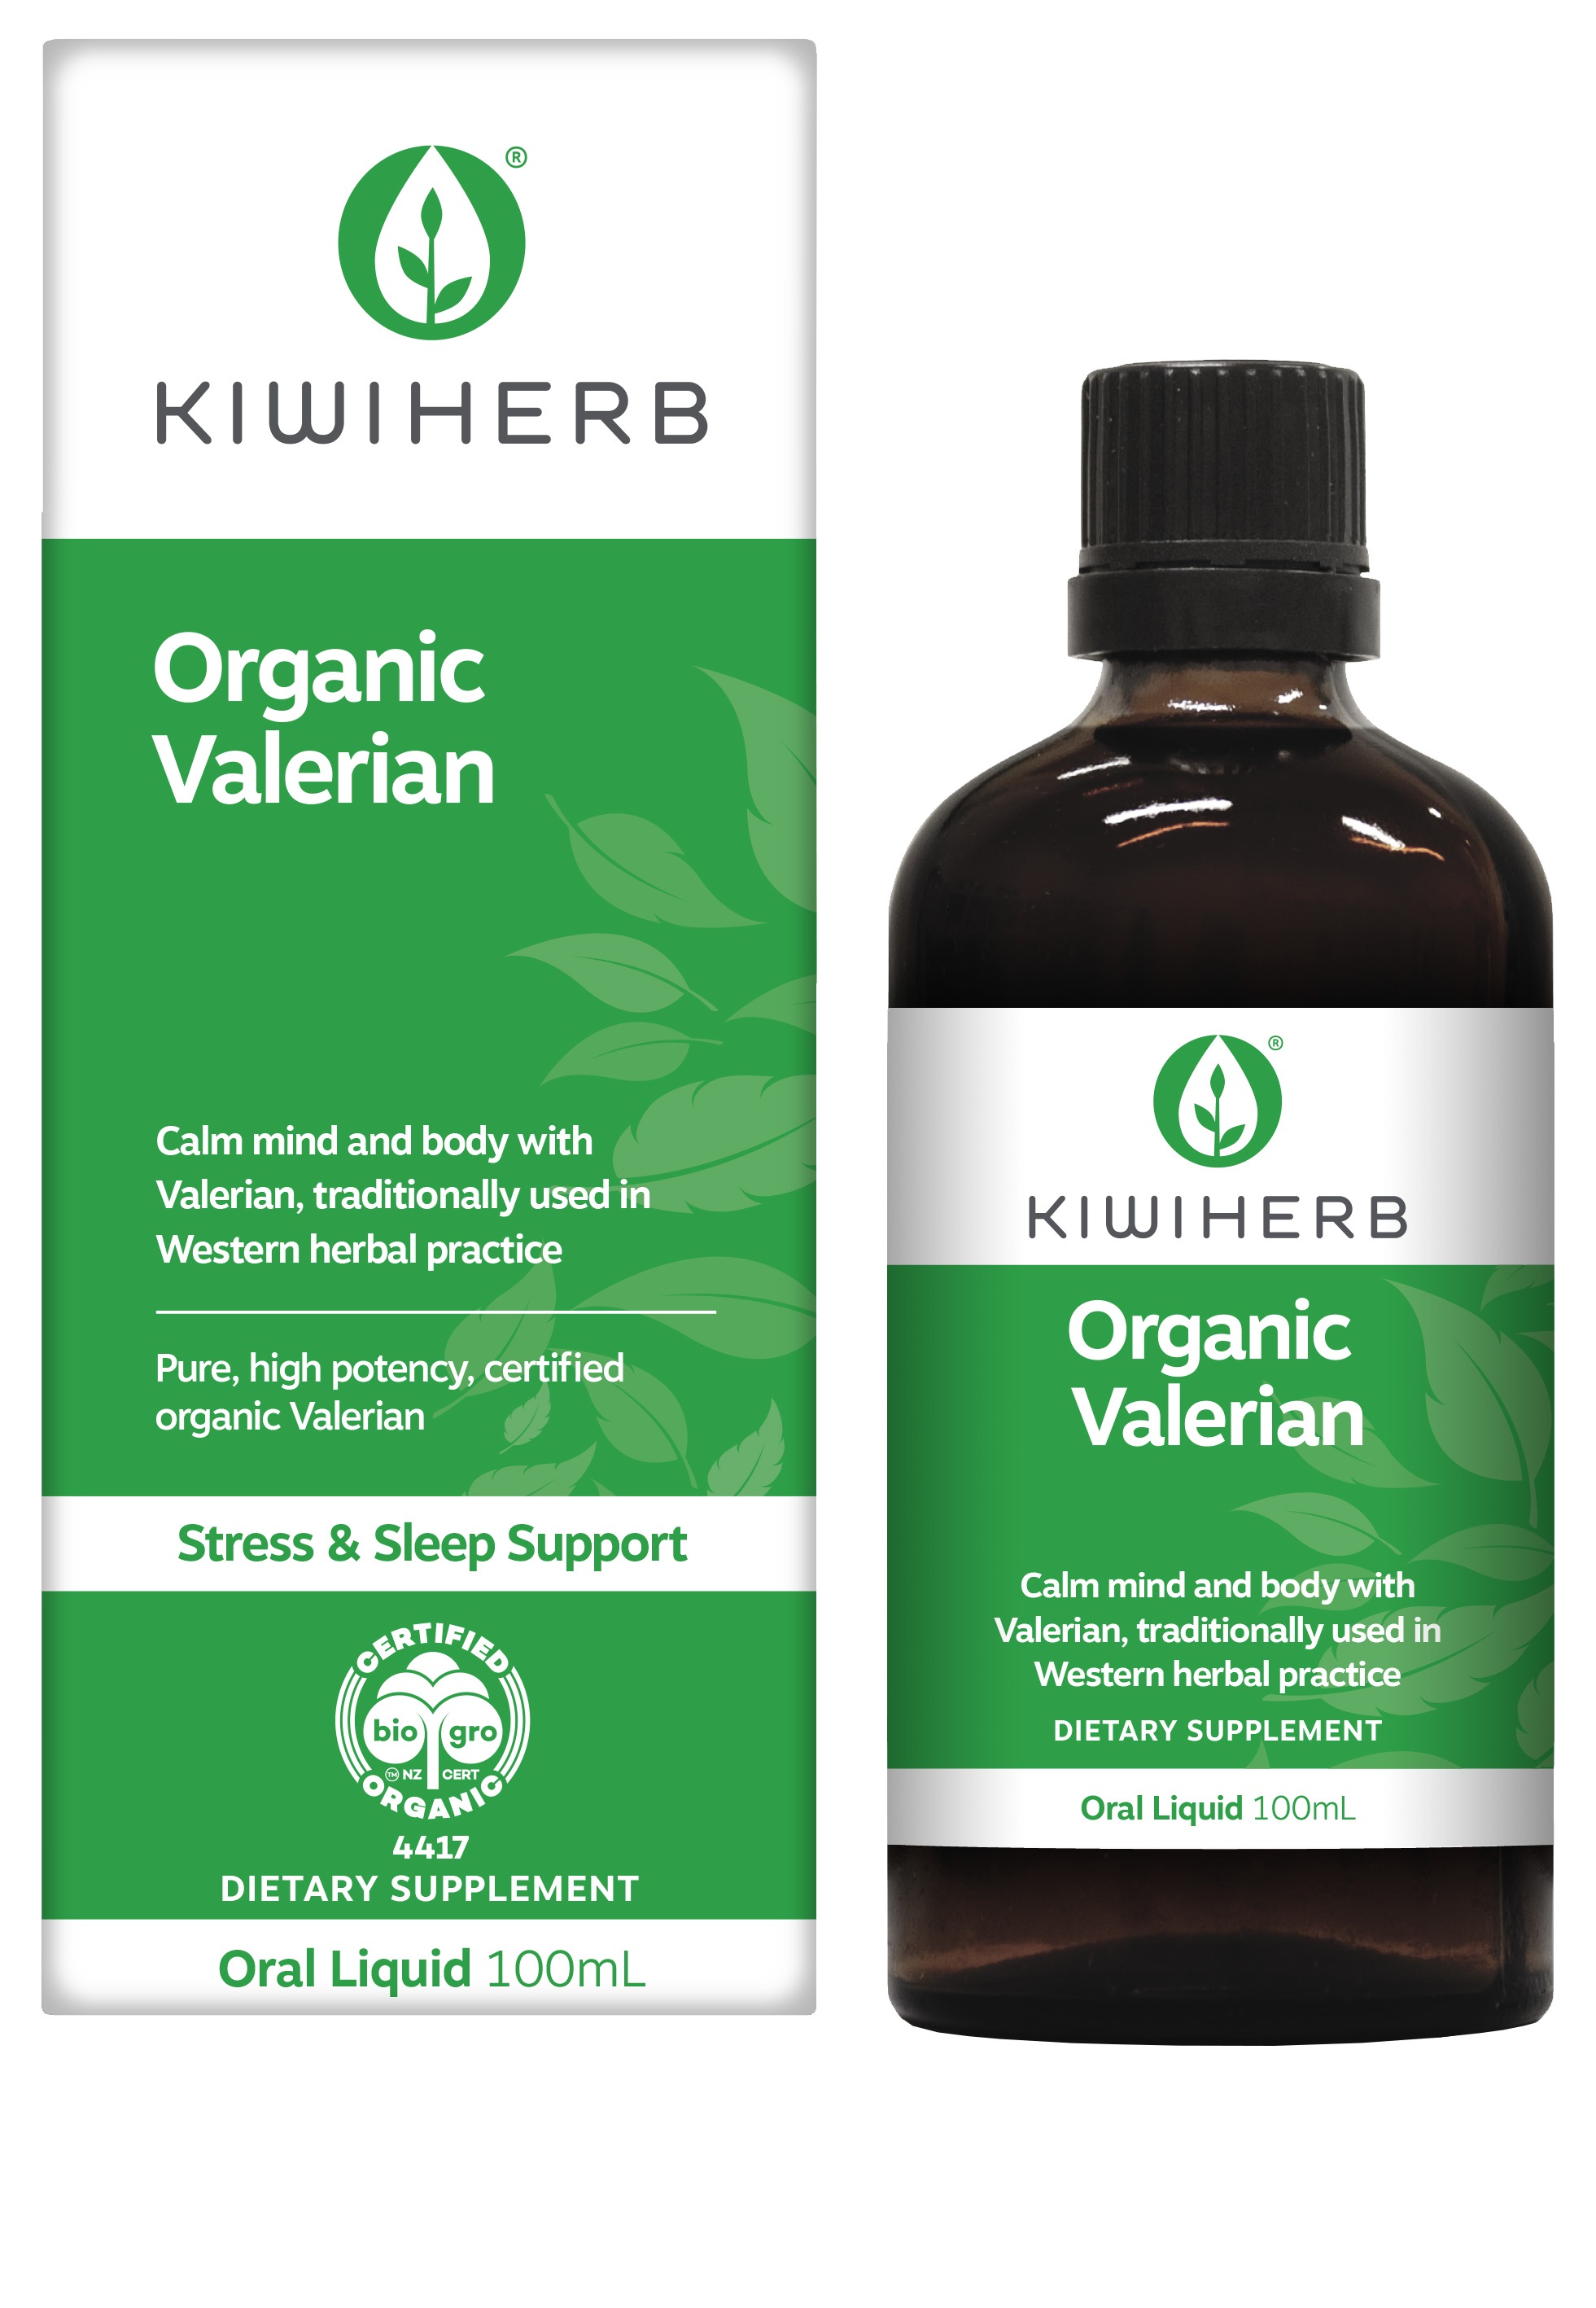 Kiwiherb Valerian Organic 100ml